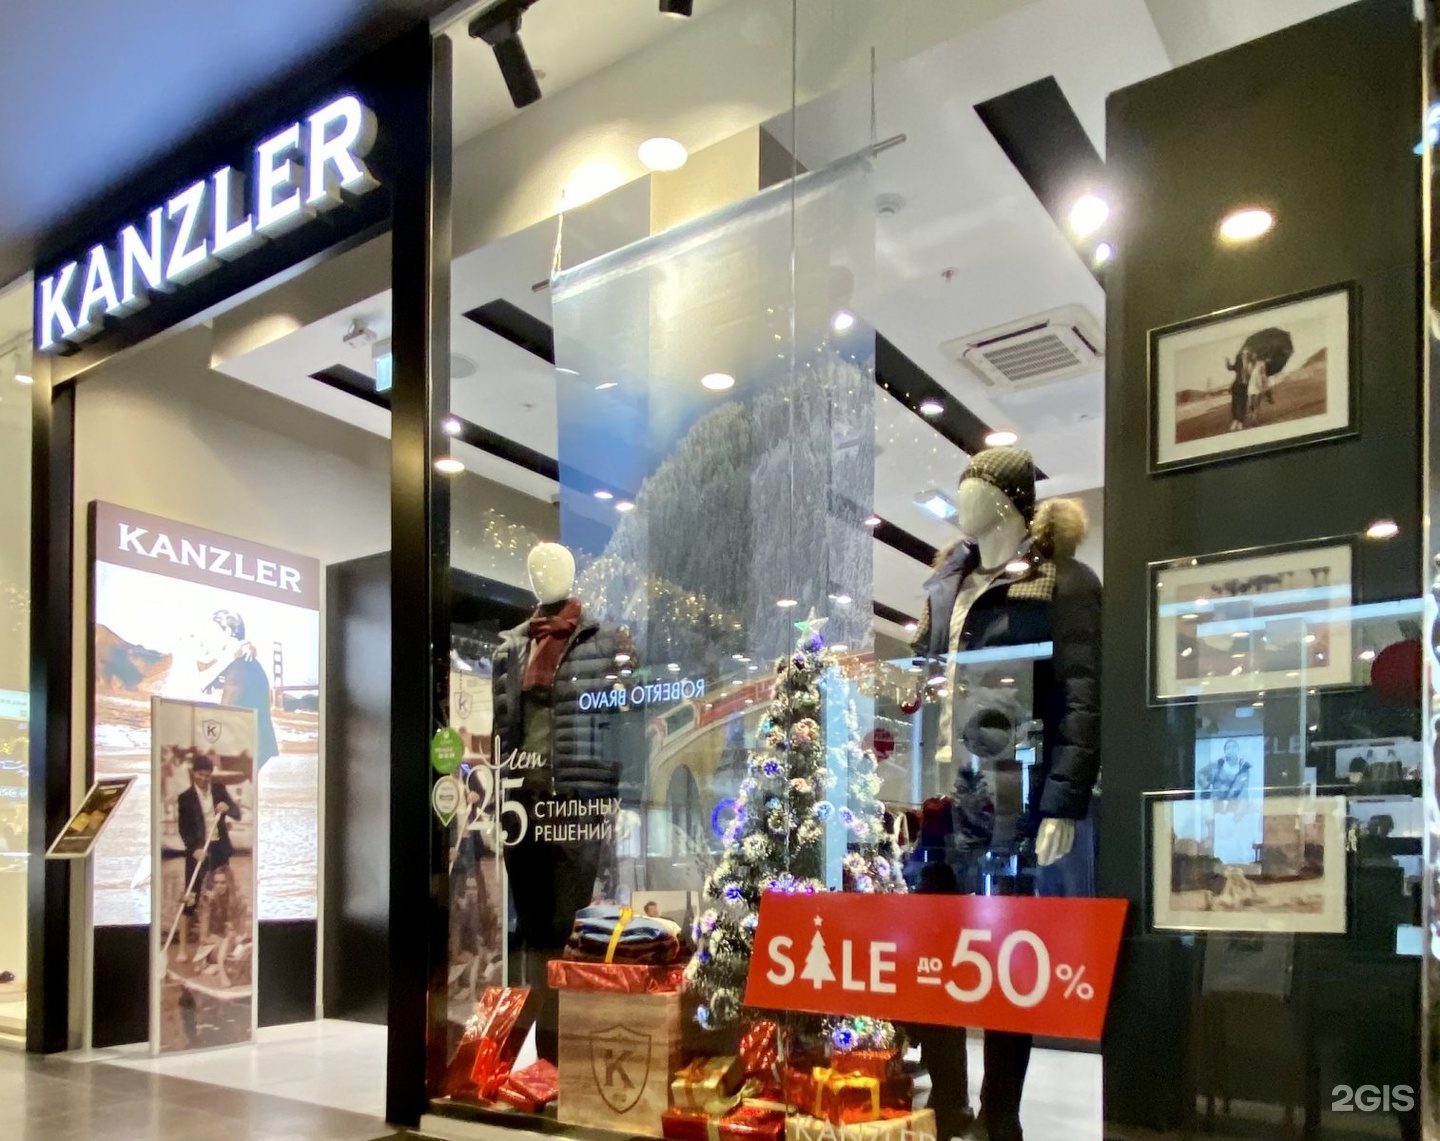 Kanzler Магазин Мужской Одежды